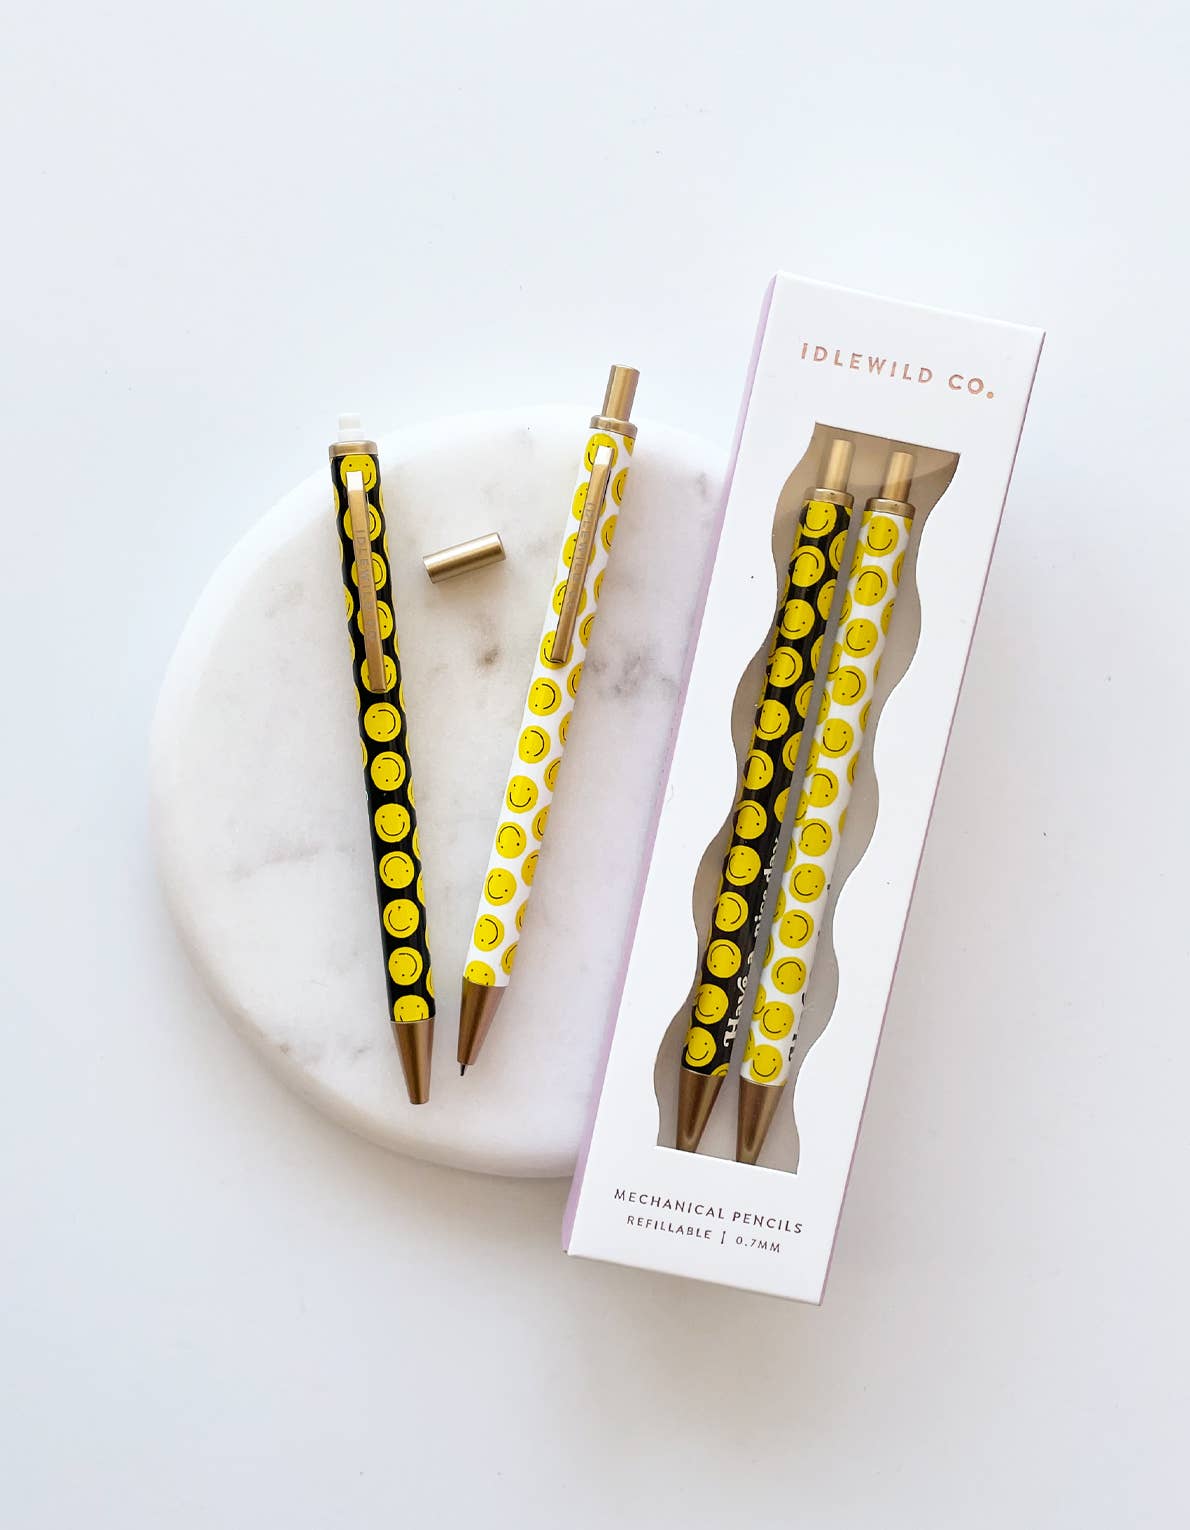 Smiley Mechanical Writing Pencils